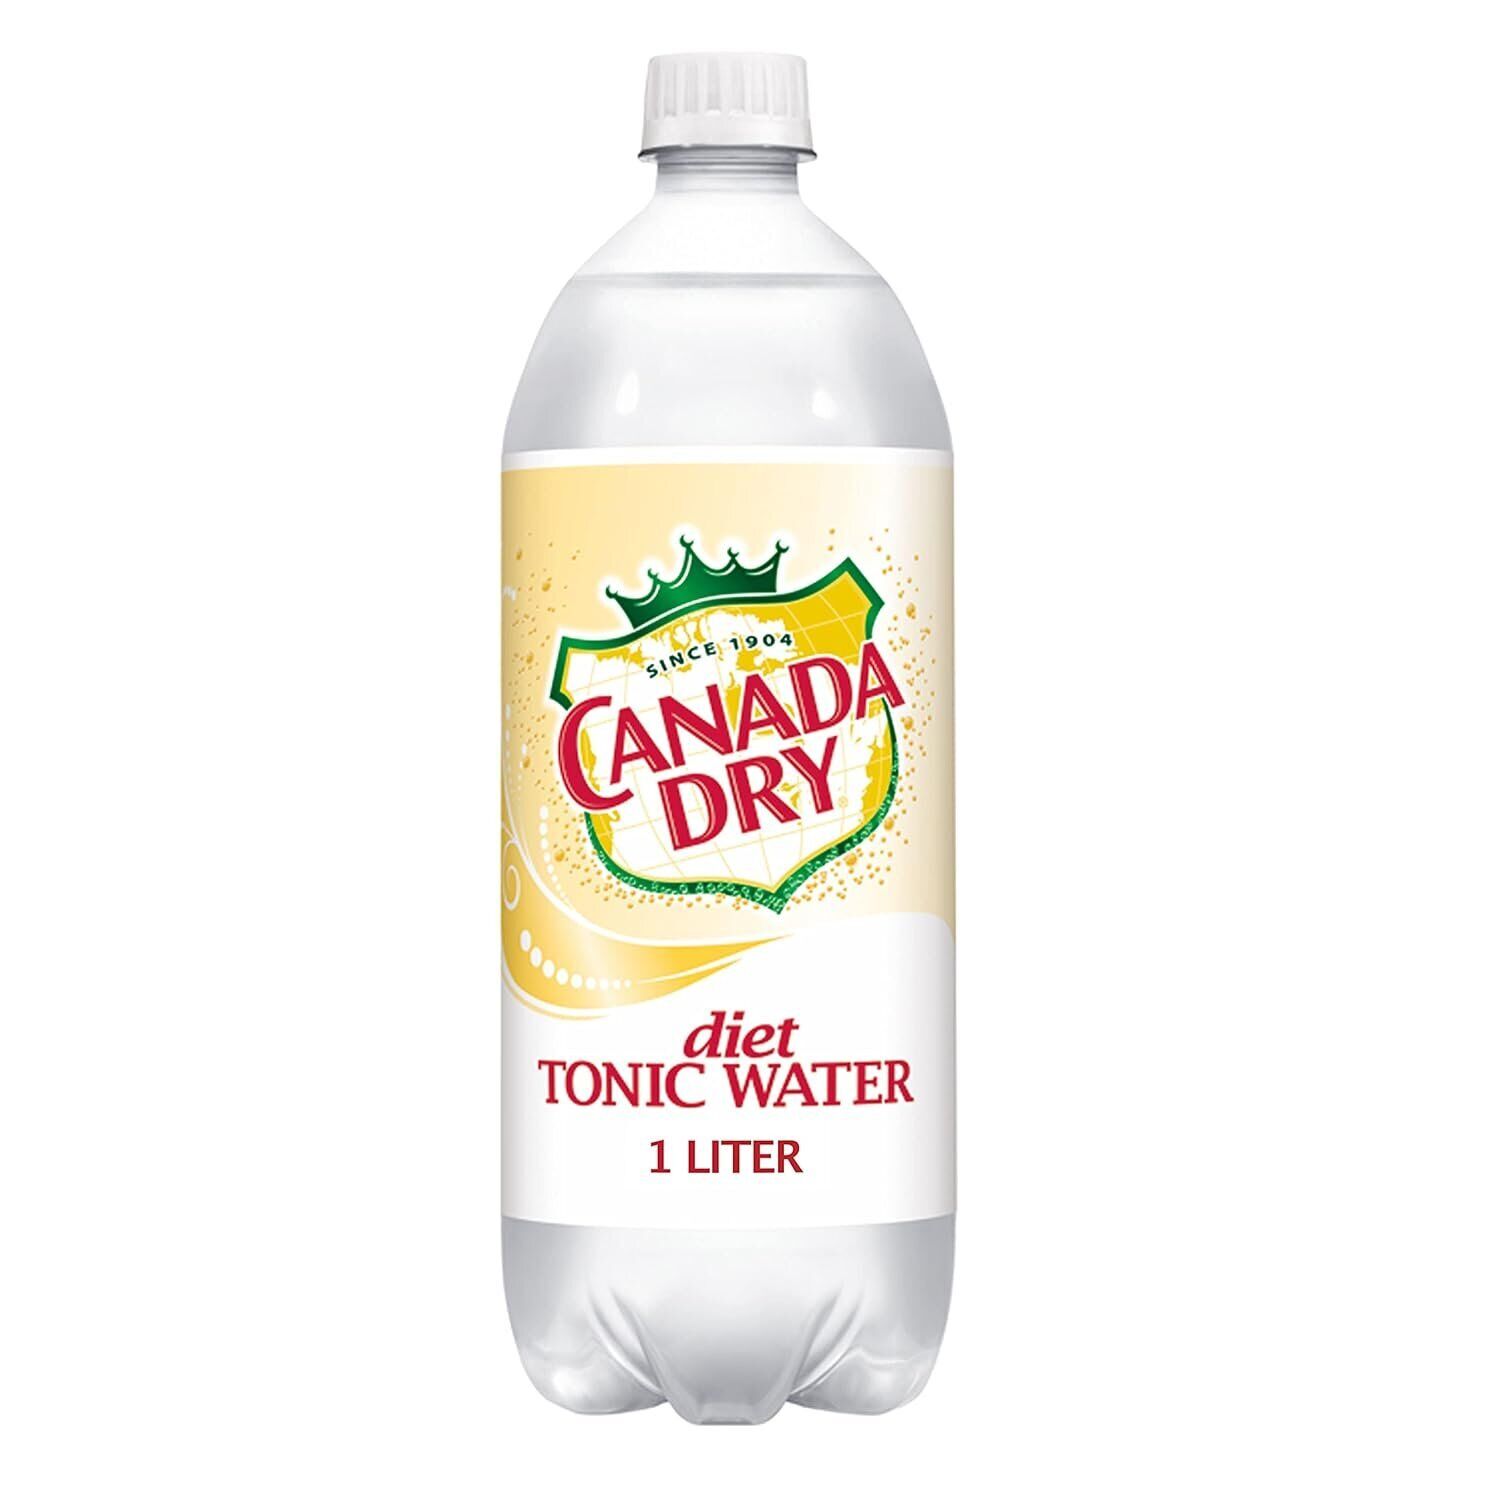 Diet Canada Dry Tonic Water, 1 Liter Bottle